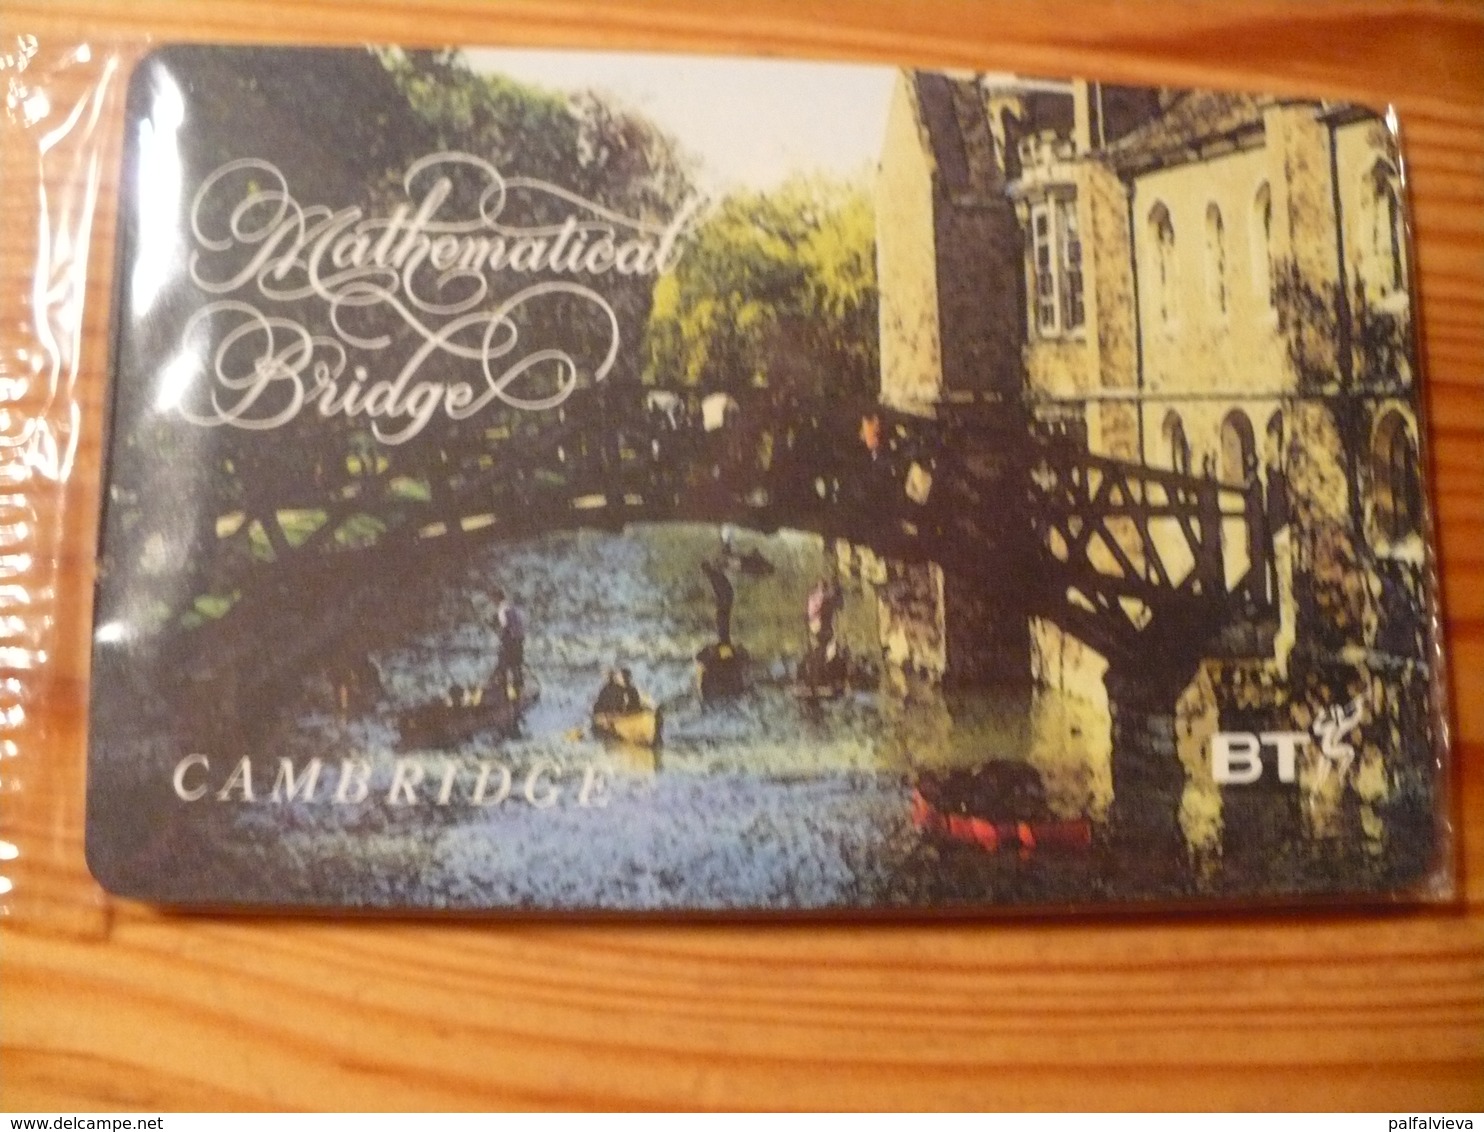 Phonecard United Kingdom, BT - Cambridge, Matchematical Bridge - BT Generales